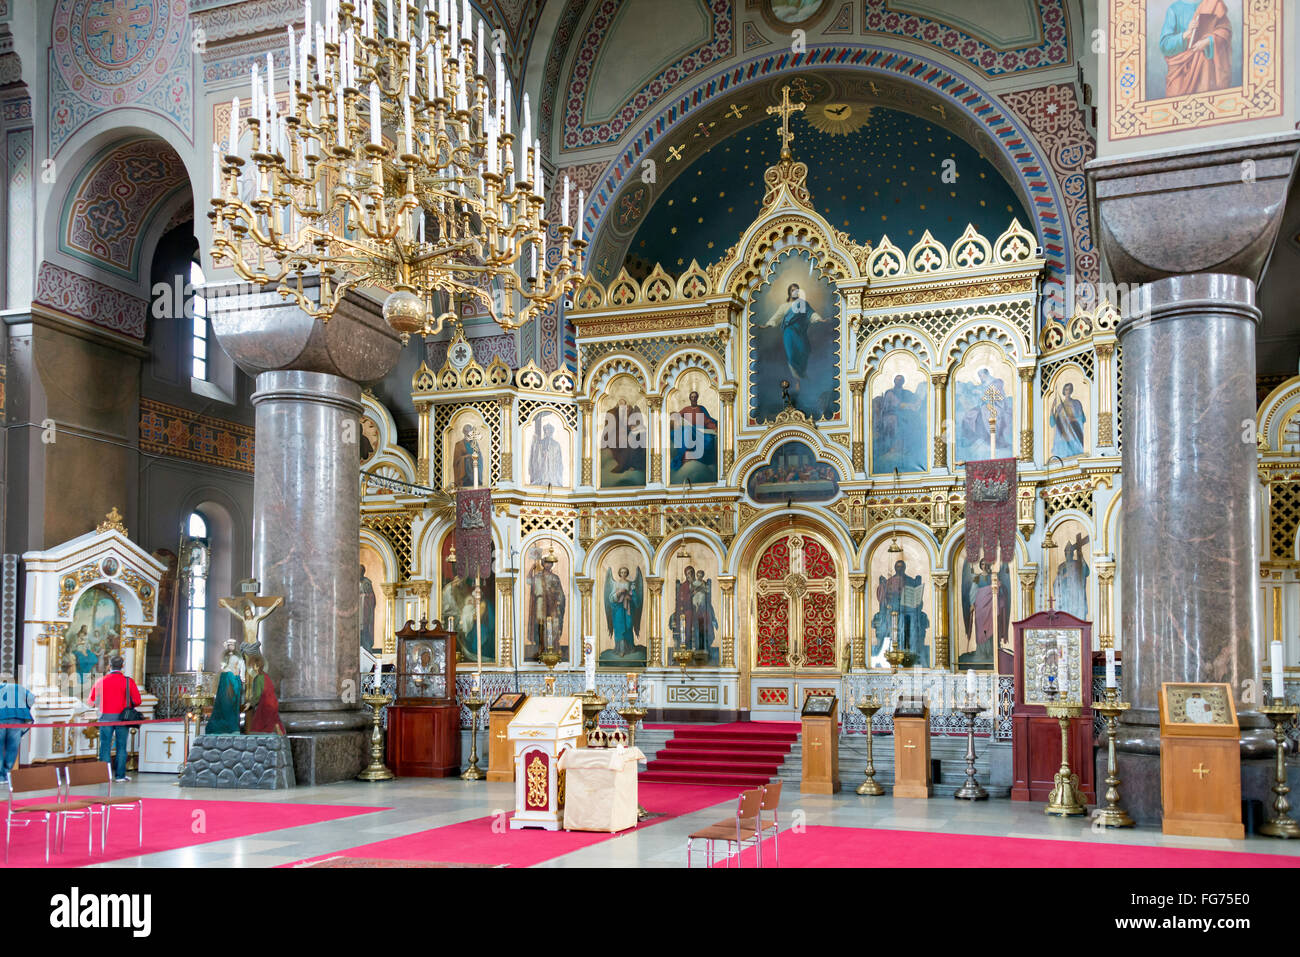 Der Altar der orthodoxen Kathedrale von Uspenski (Uspenskin katedraali), Kanavakatu, Helsinki, Republik Finnland Stockfoto